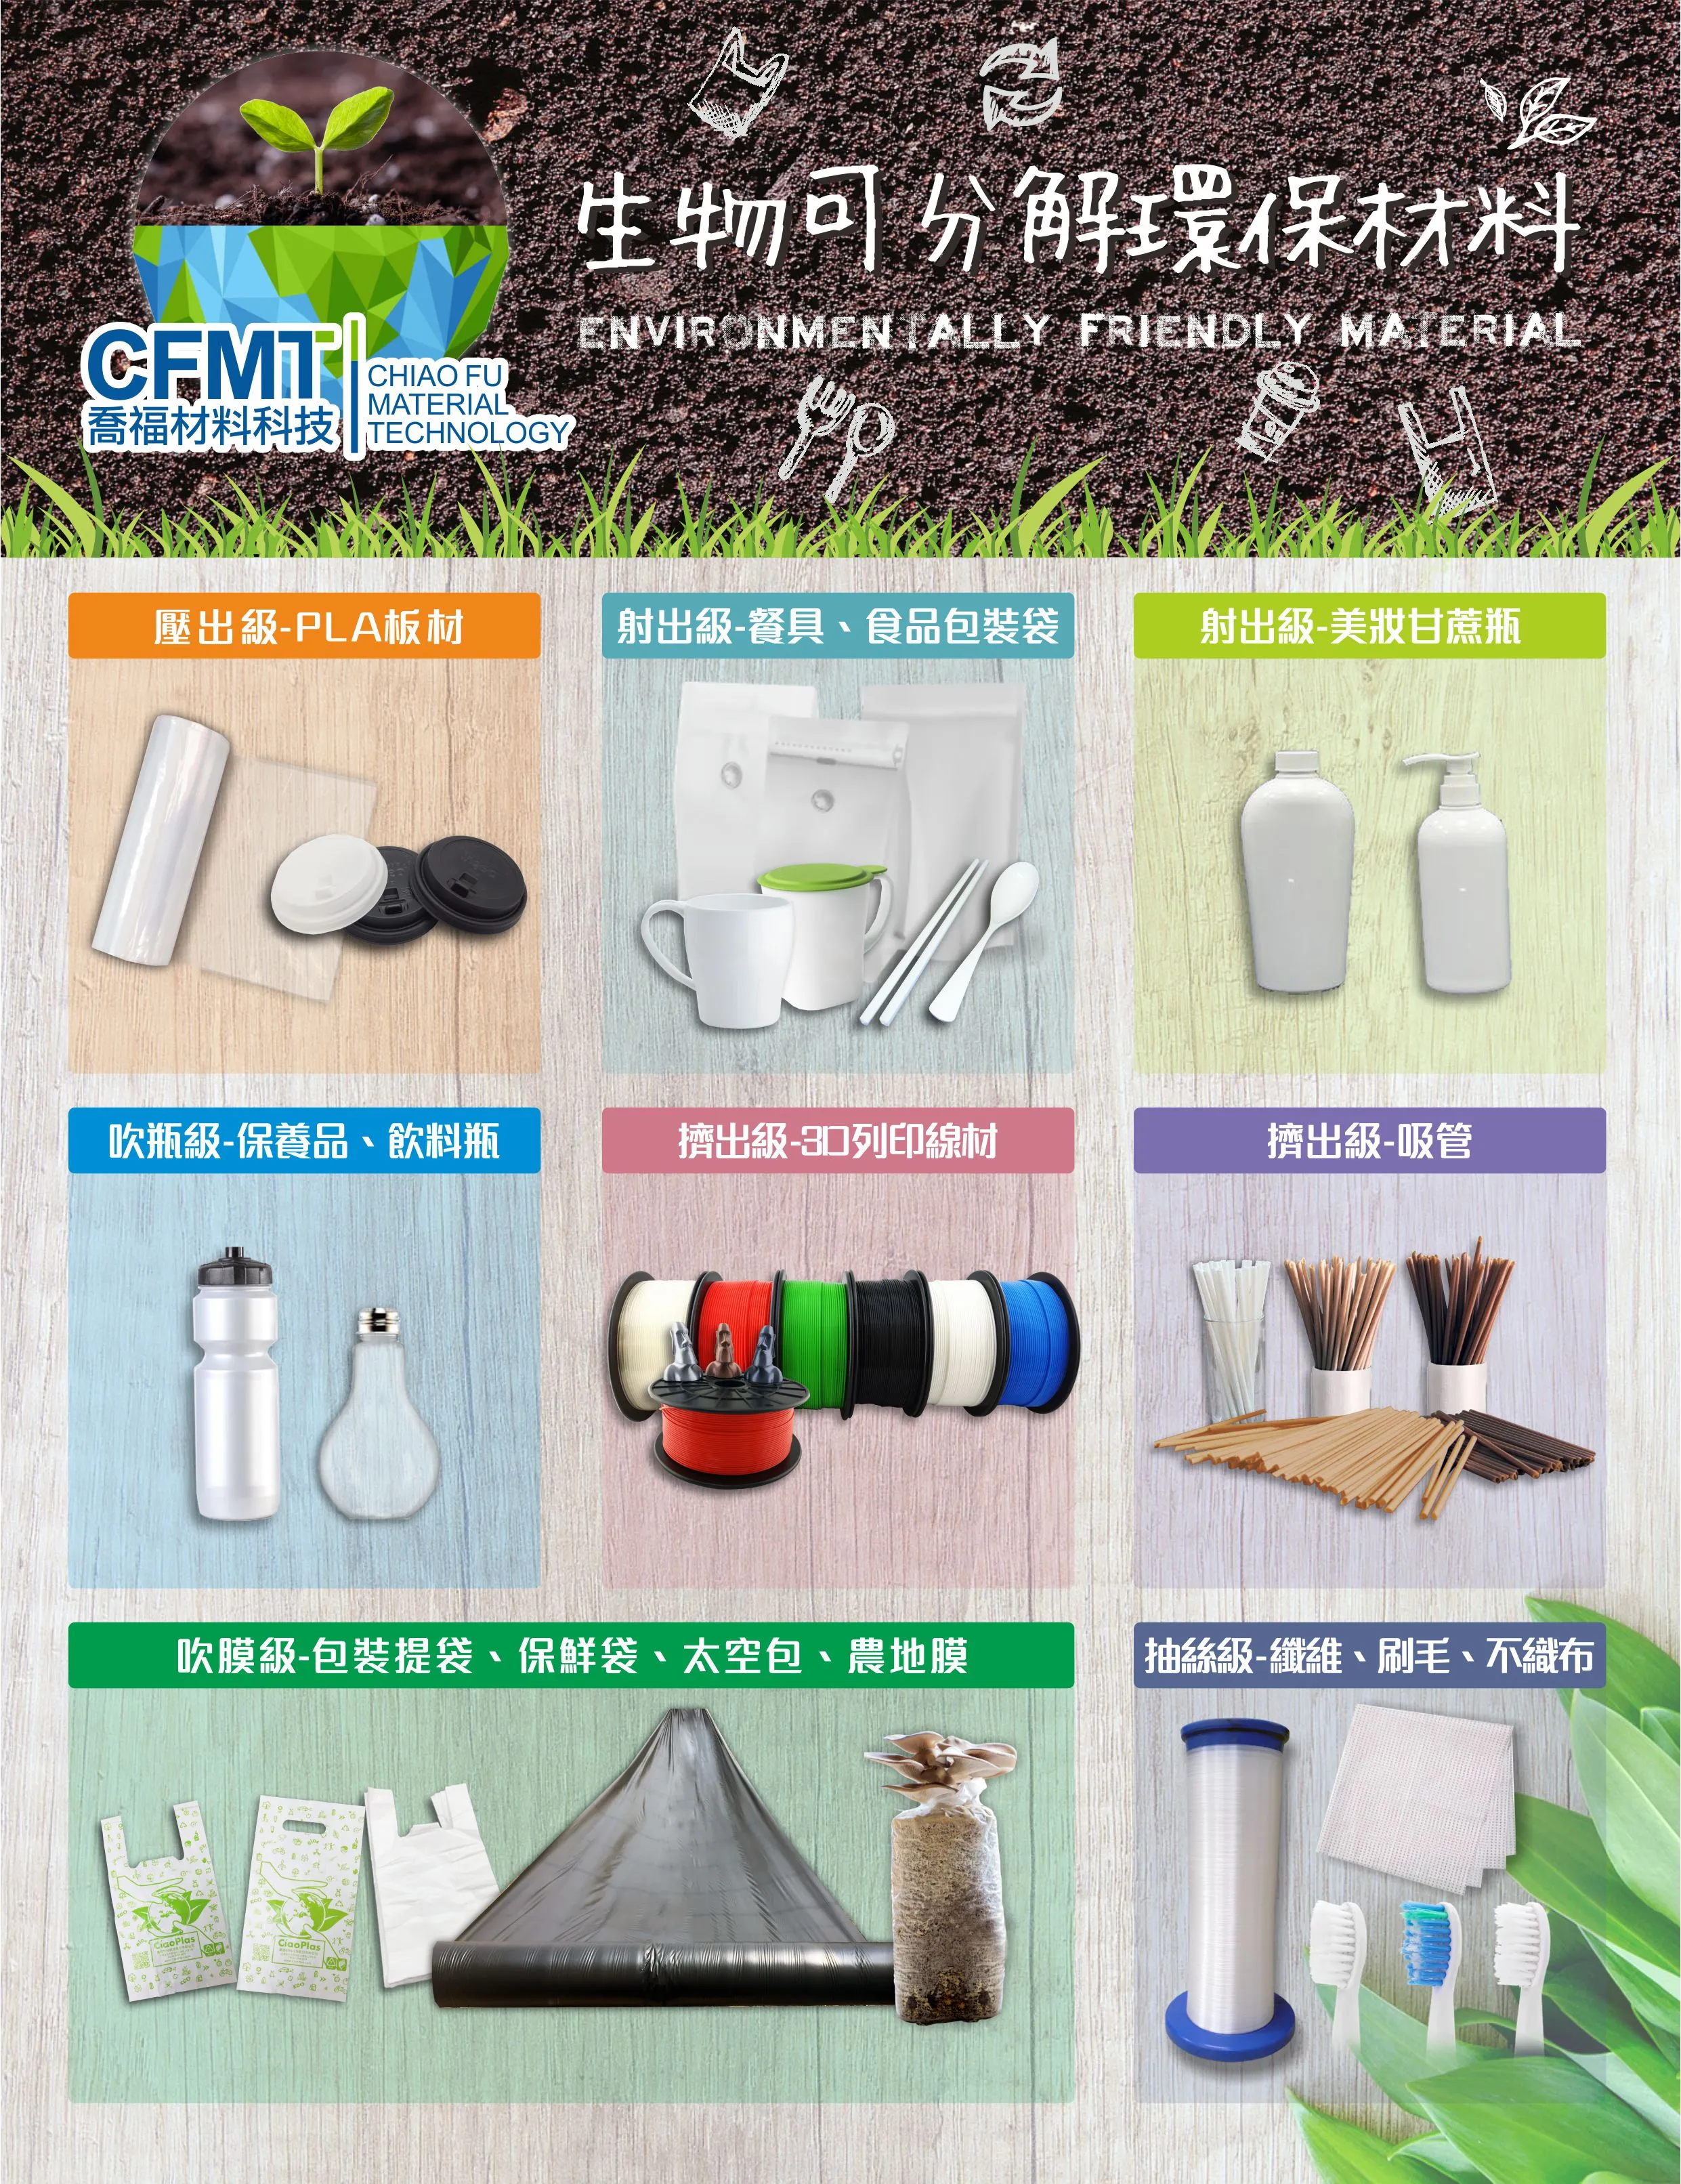 Chiao Fu Material - engineering plastics & Biomass composite materials